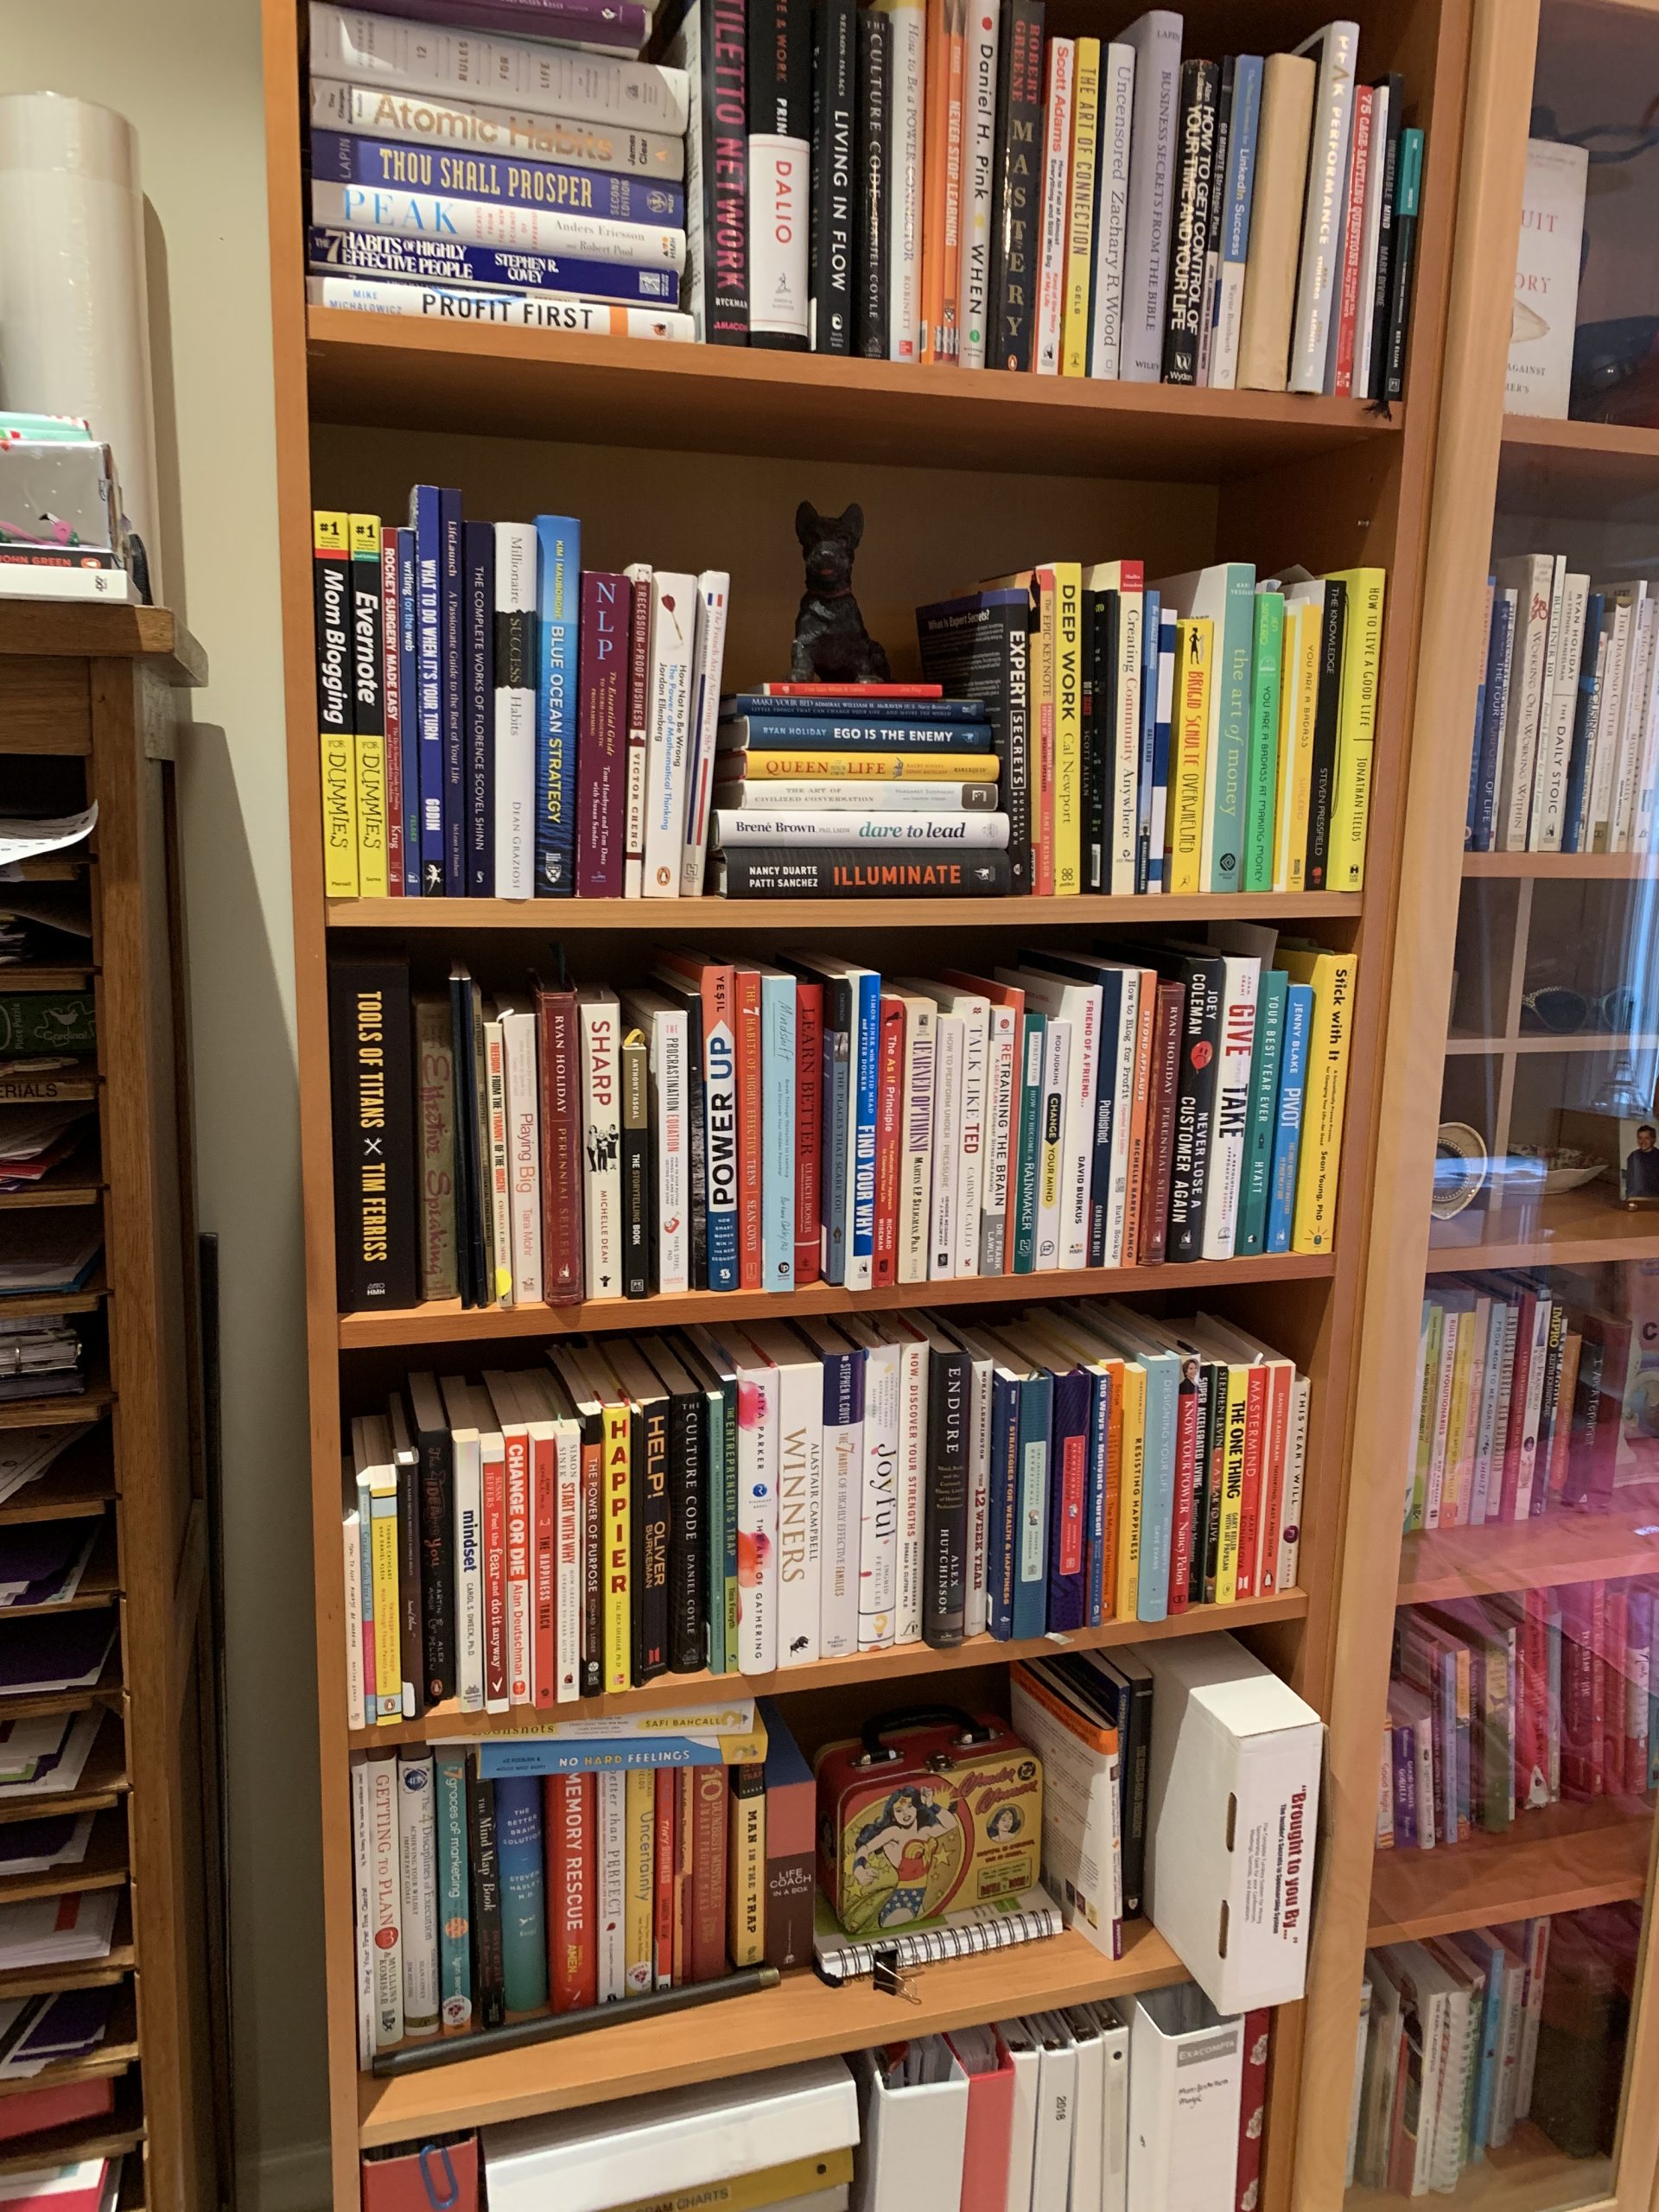 A neat and organized bookshelf